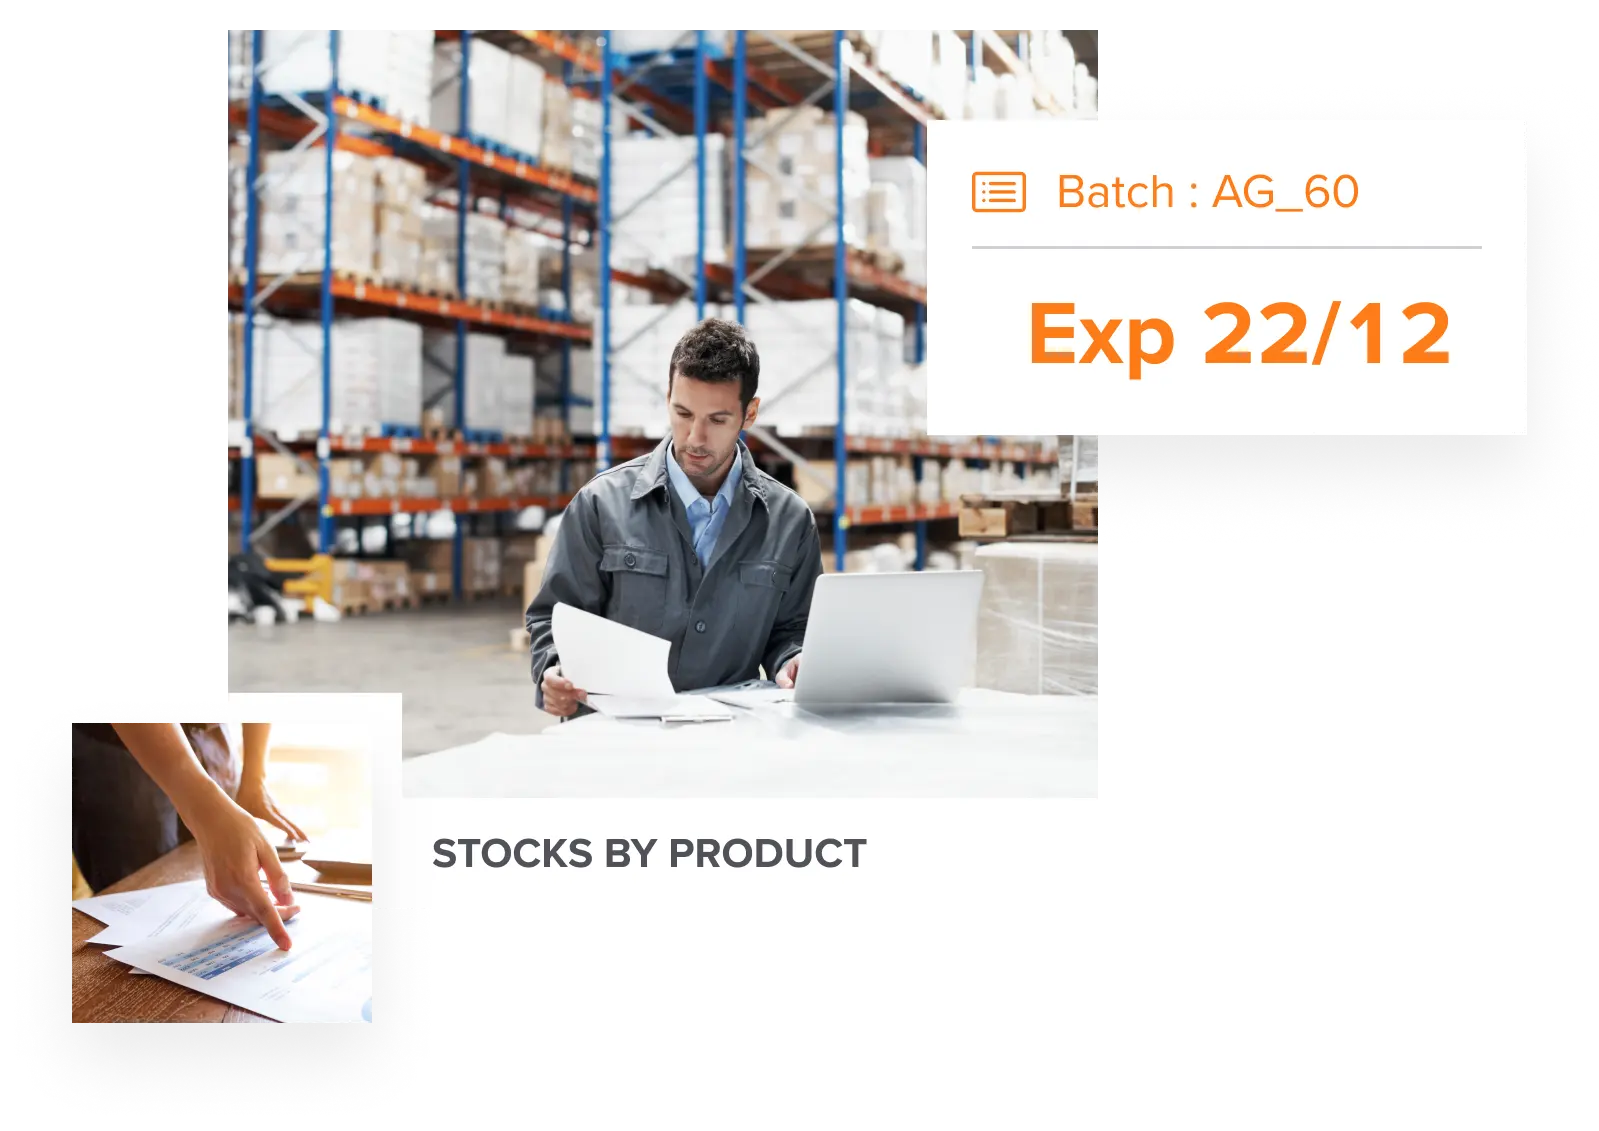 distributo-wholesaler-stock-reports